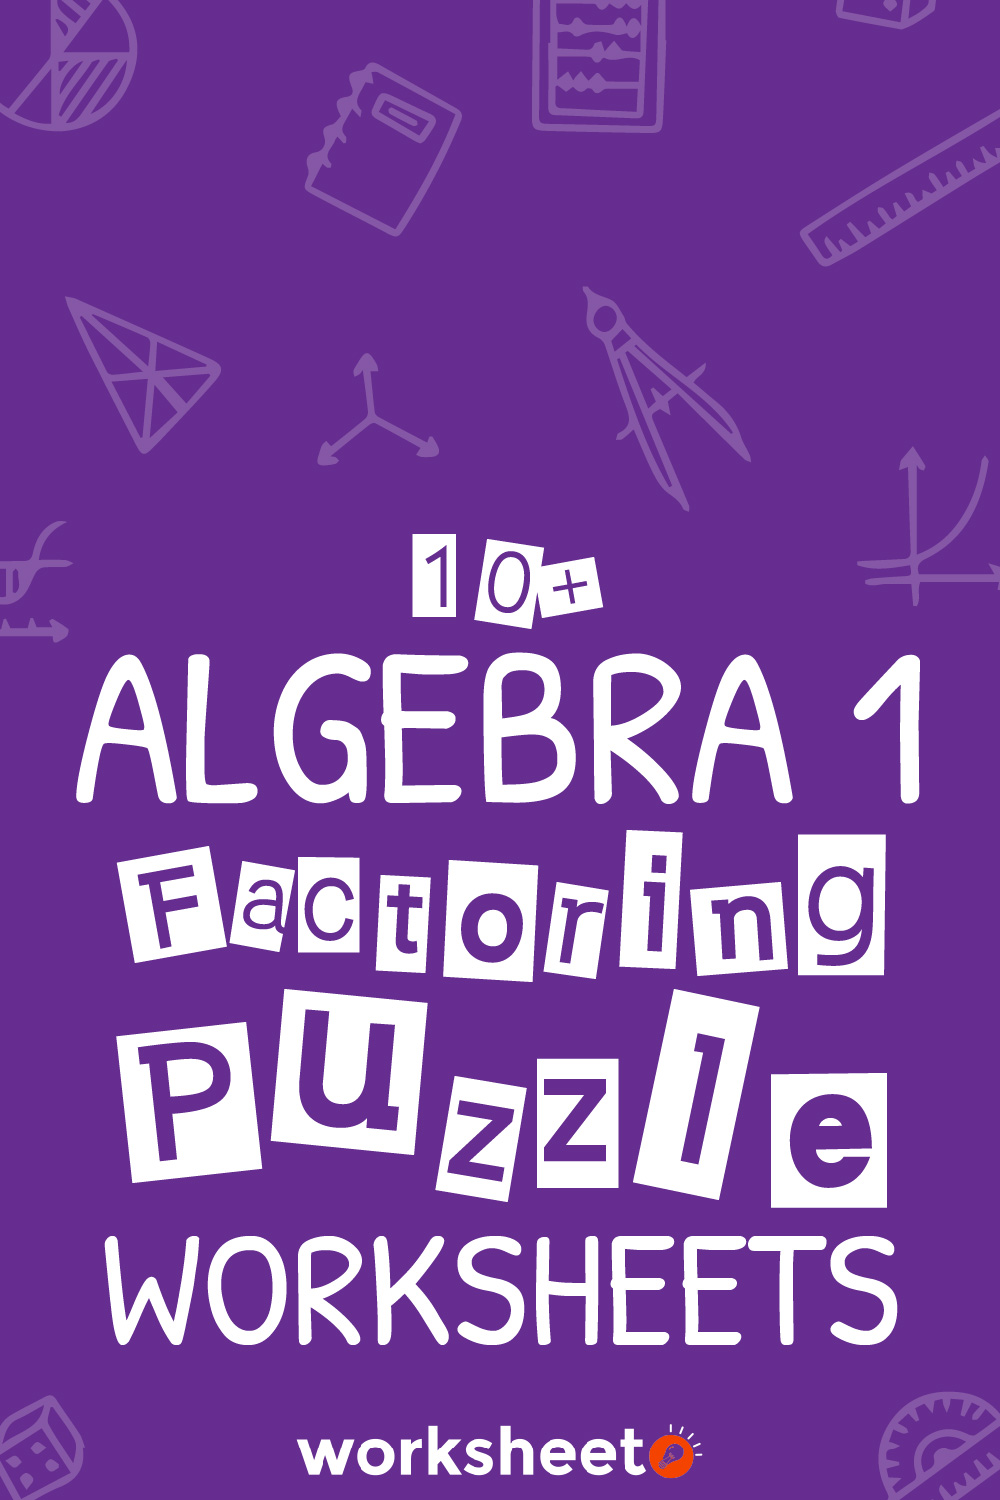 Algebra 1 Factoring Puzzle Worksheets